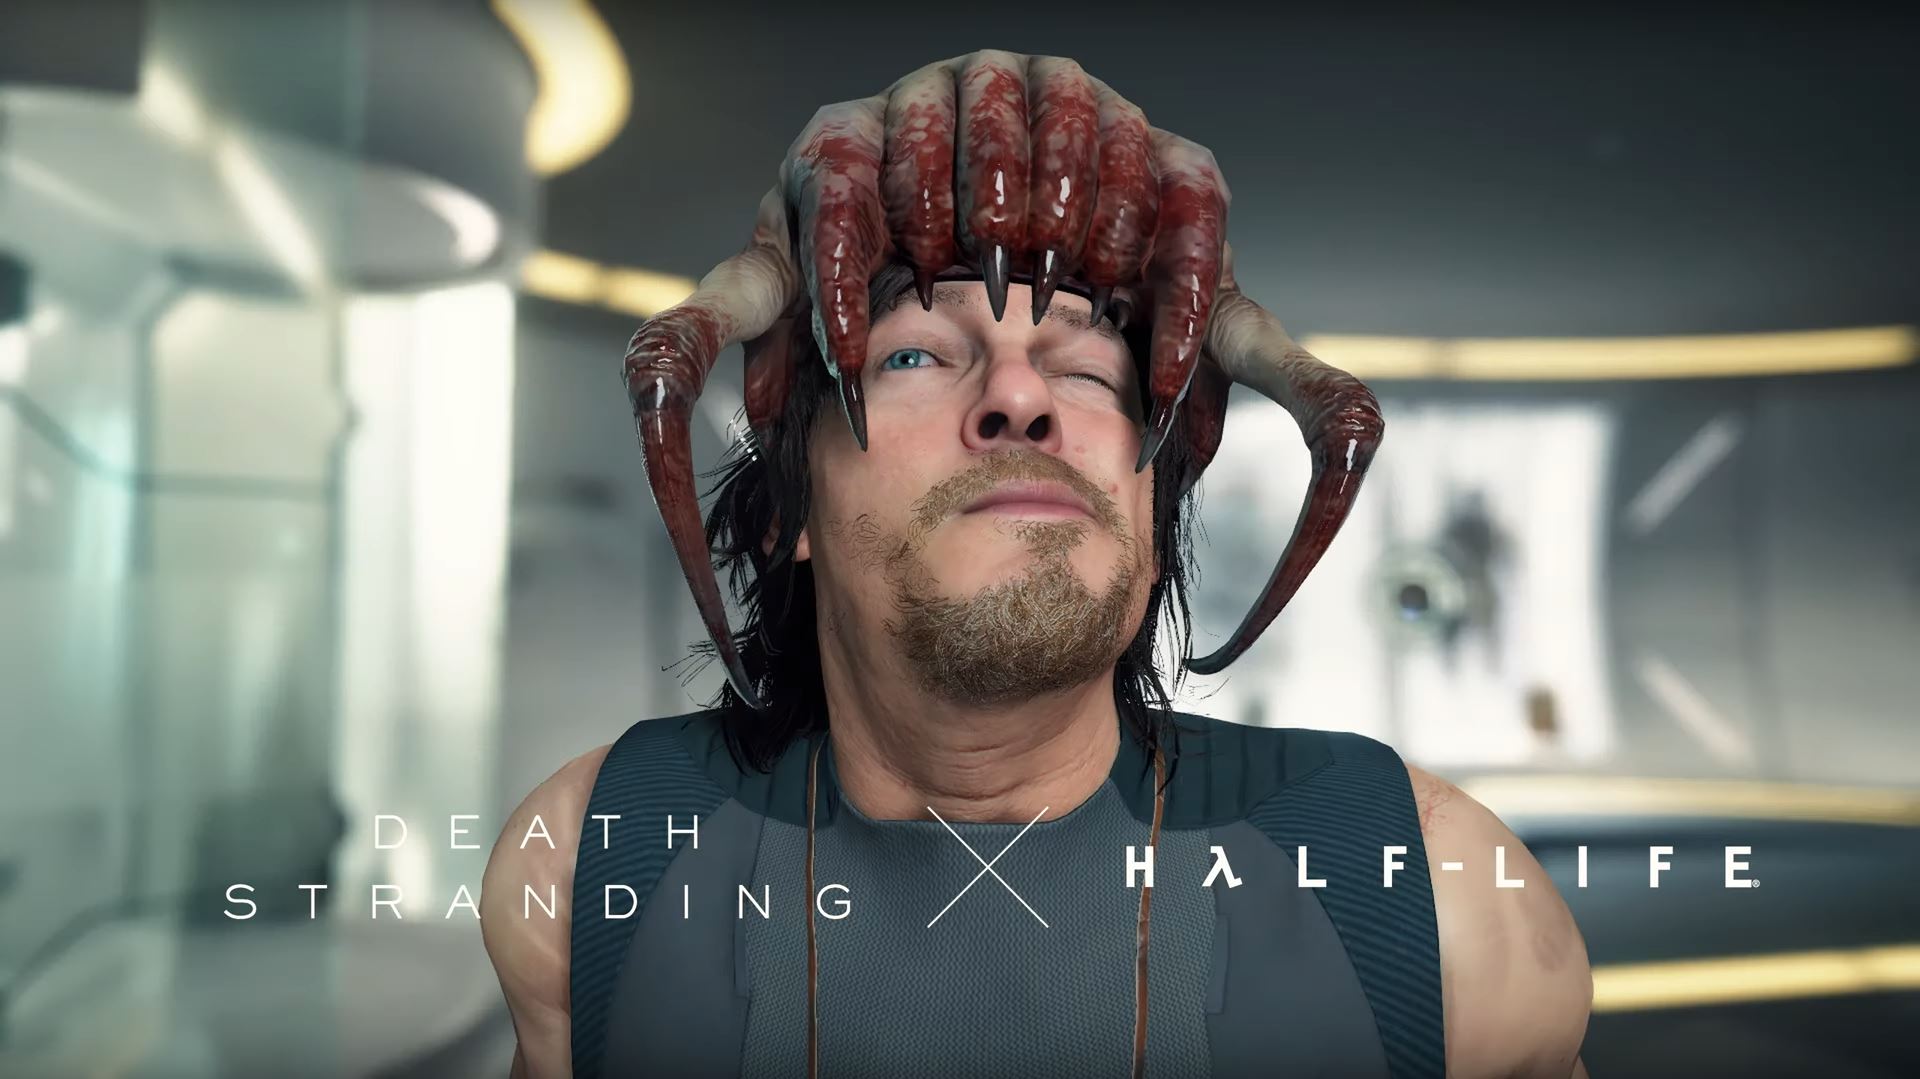 Death Stranding & Half-Life